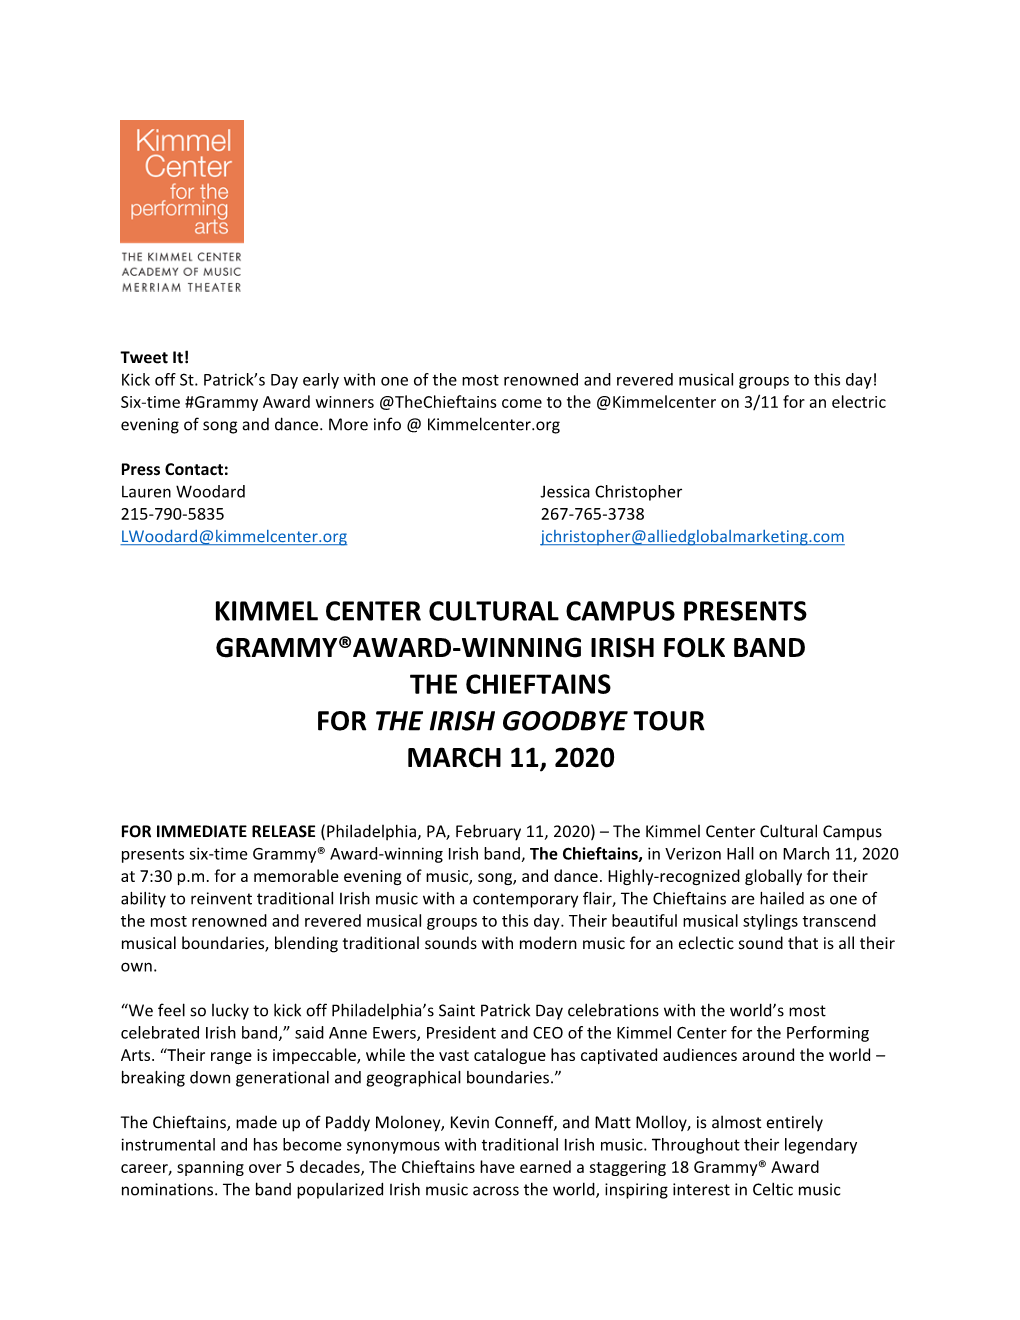 Kimmel Center Cultural Campus Presents Grammy®Award-Winning Irish Folk Band the Chieftains for the Irish Goodbye Tour March 11, 2020